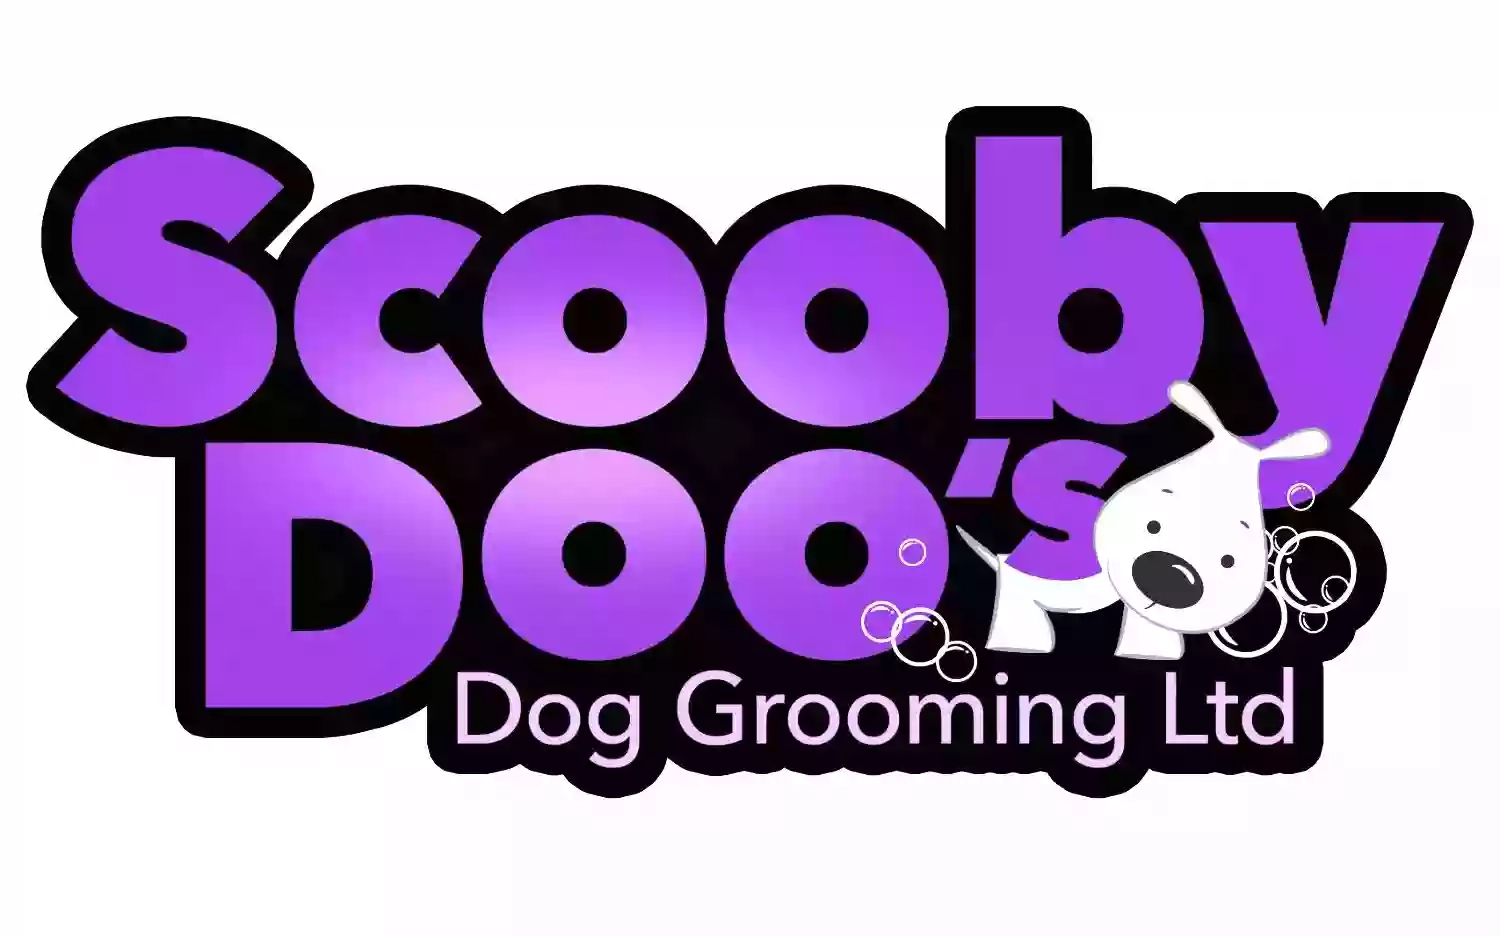 Scooby Doo's Dog Grooming Ltd